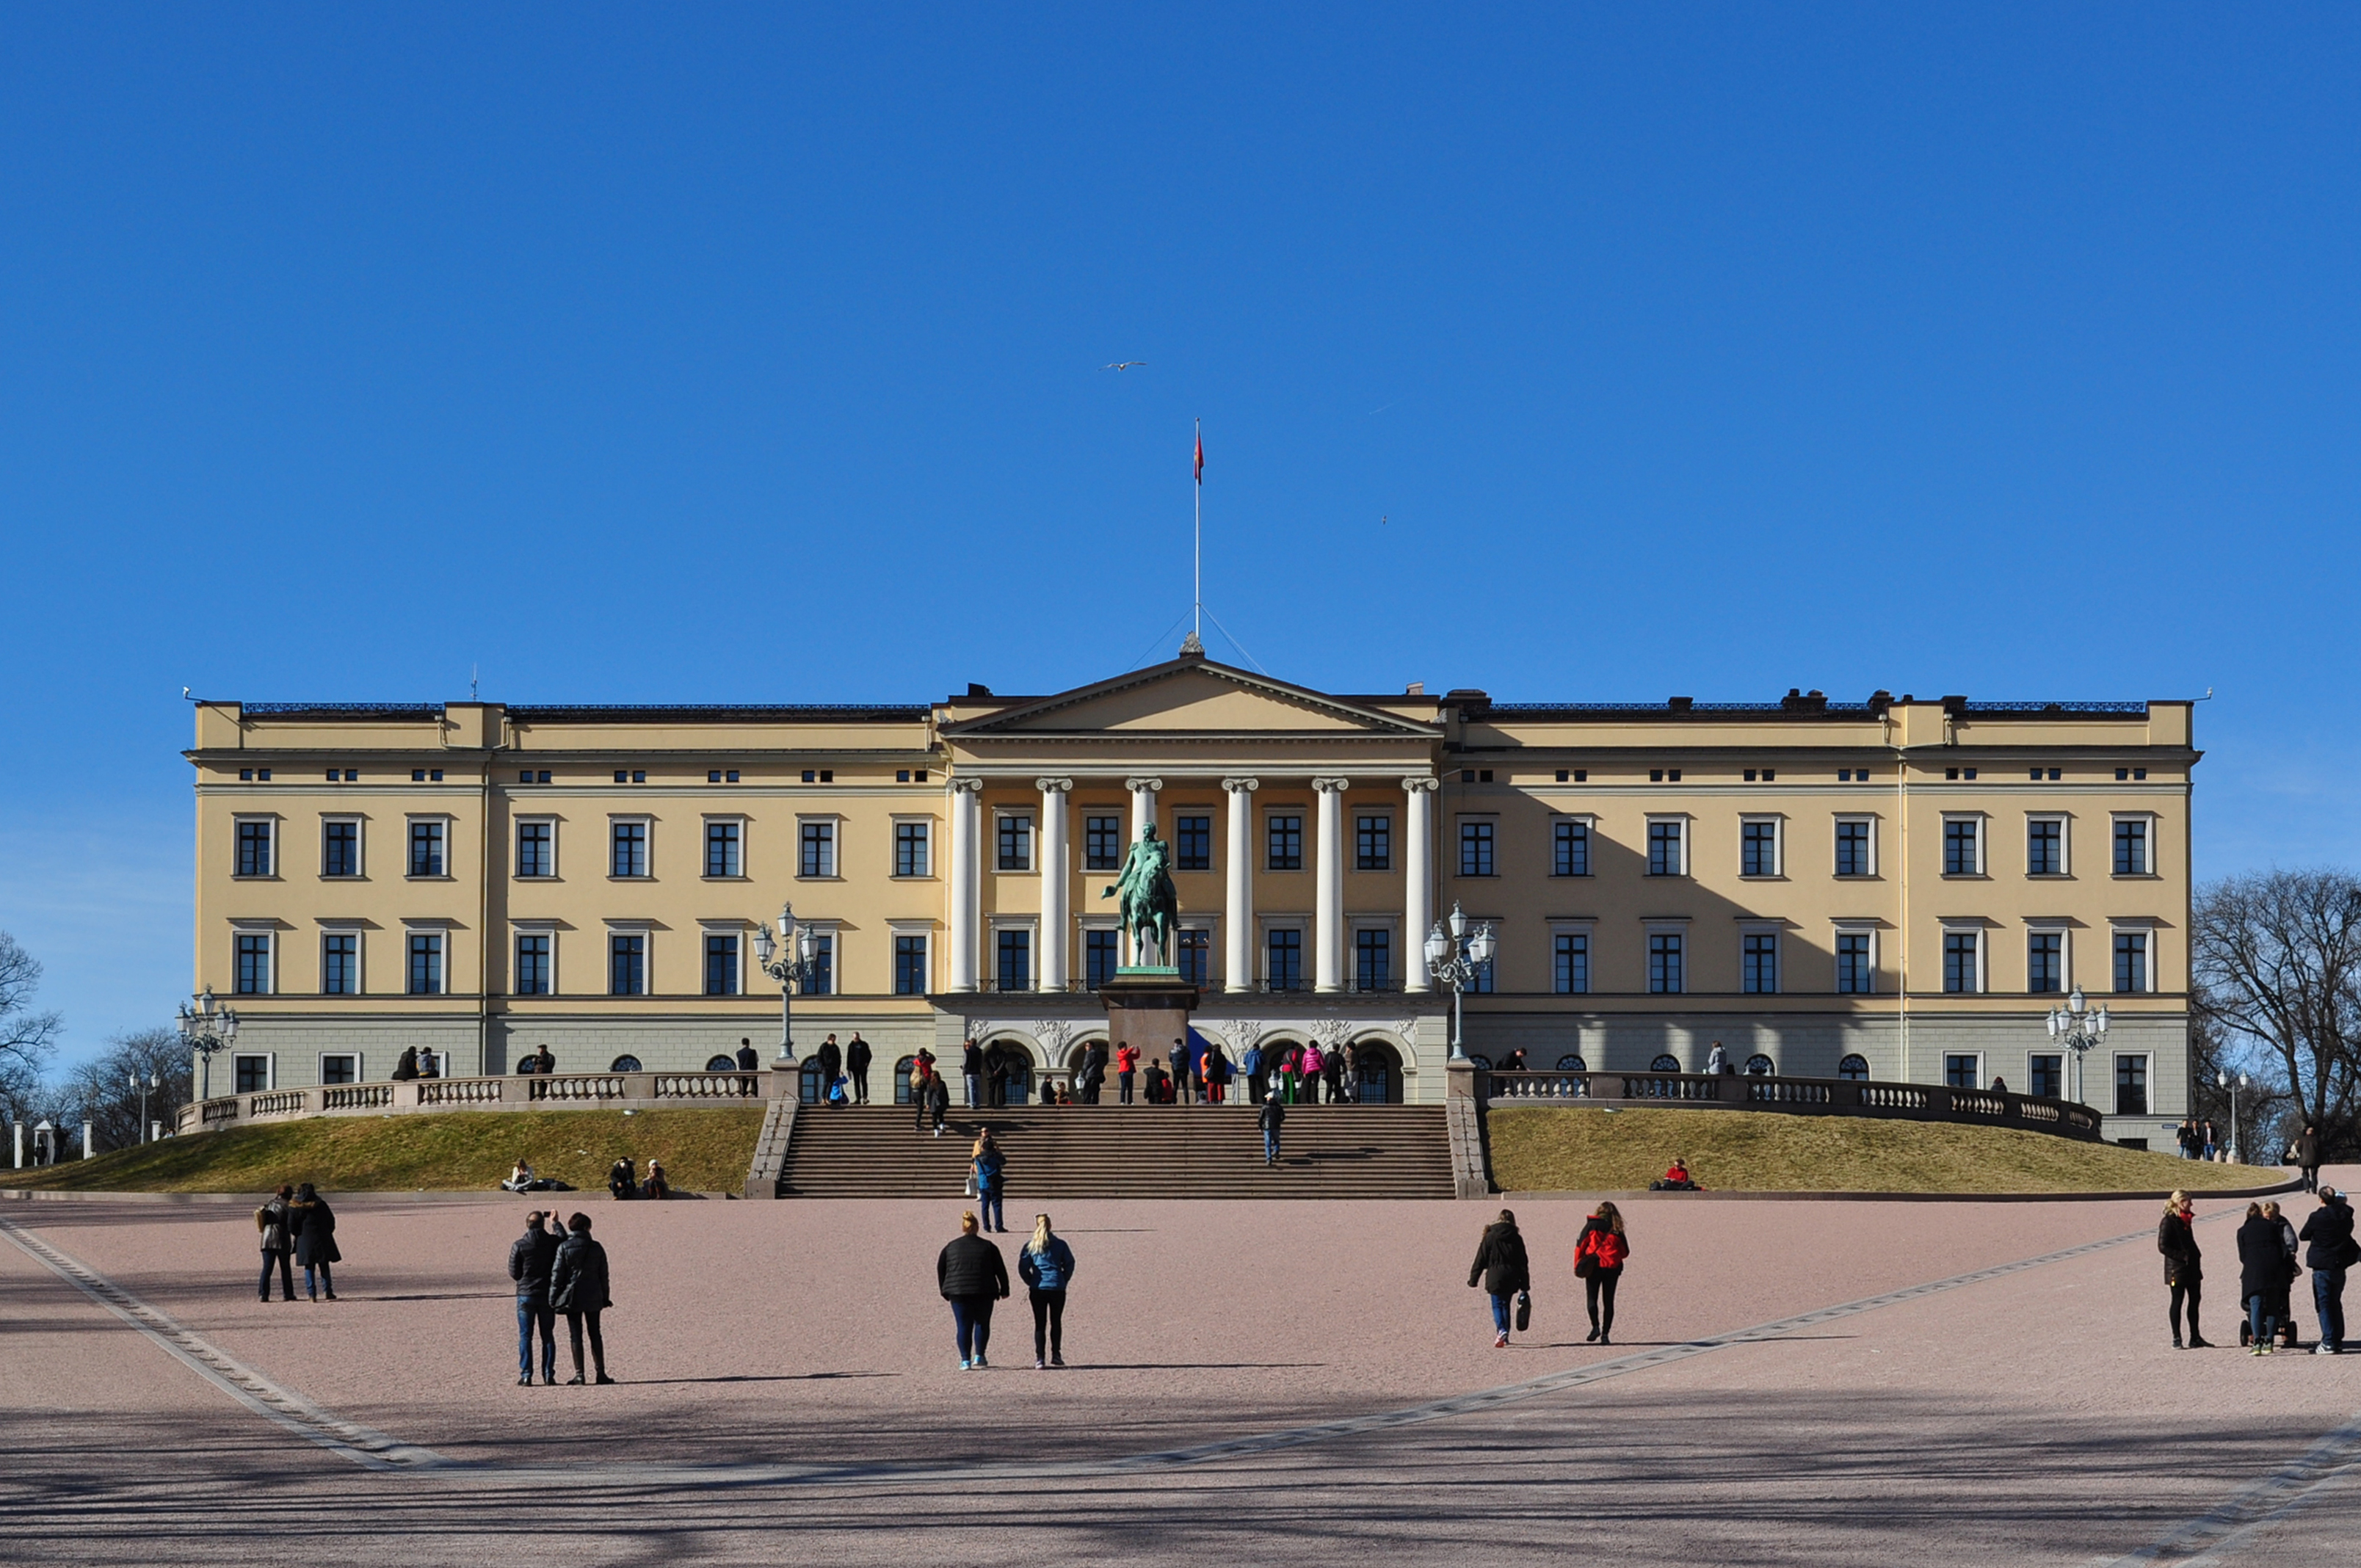 Royal Palace, Oslo (2015)